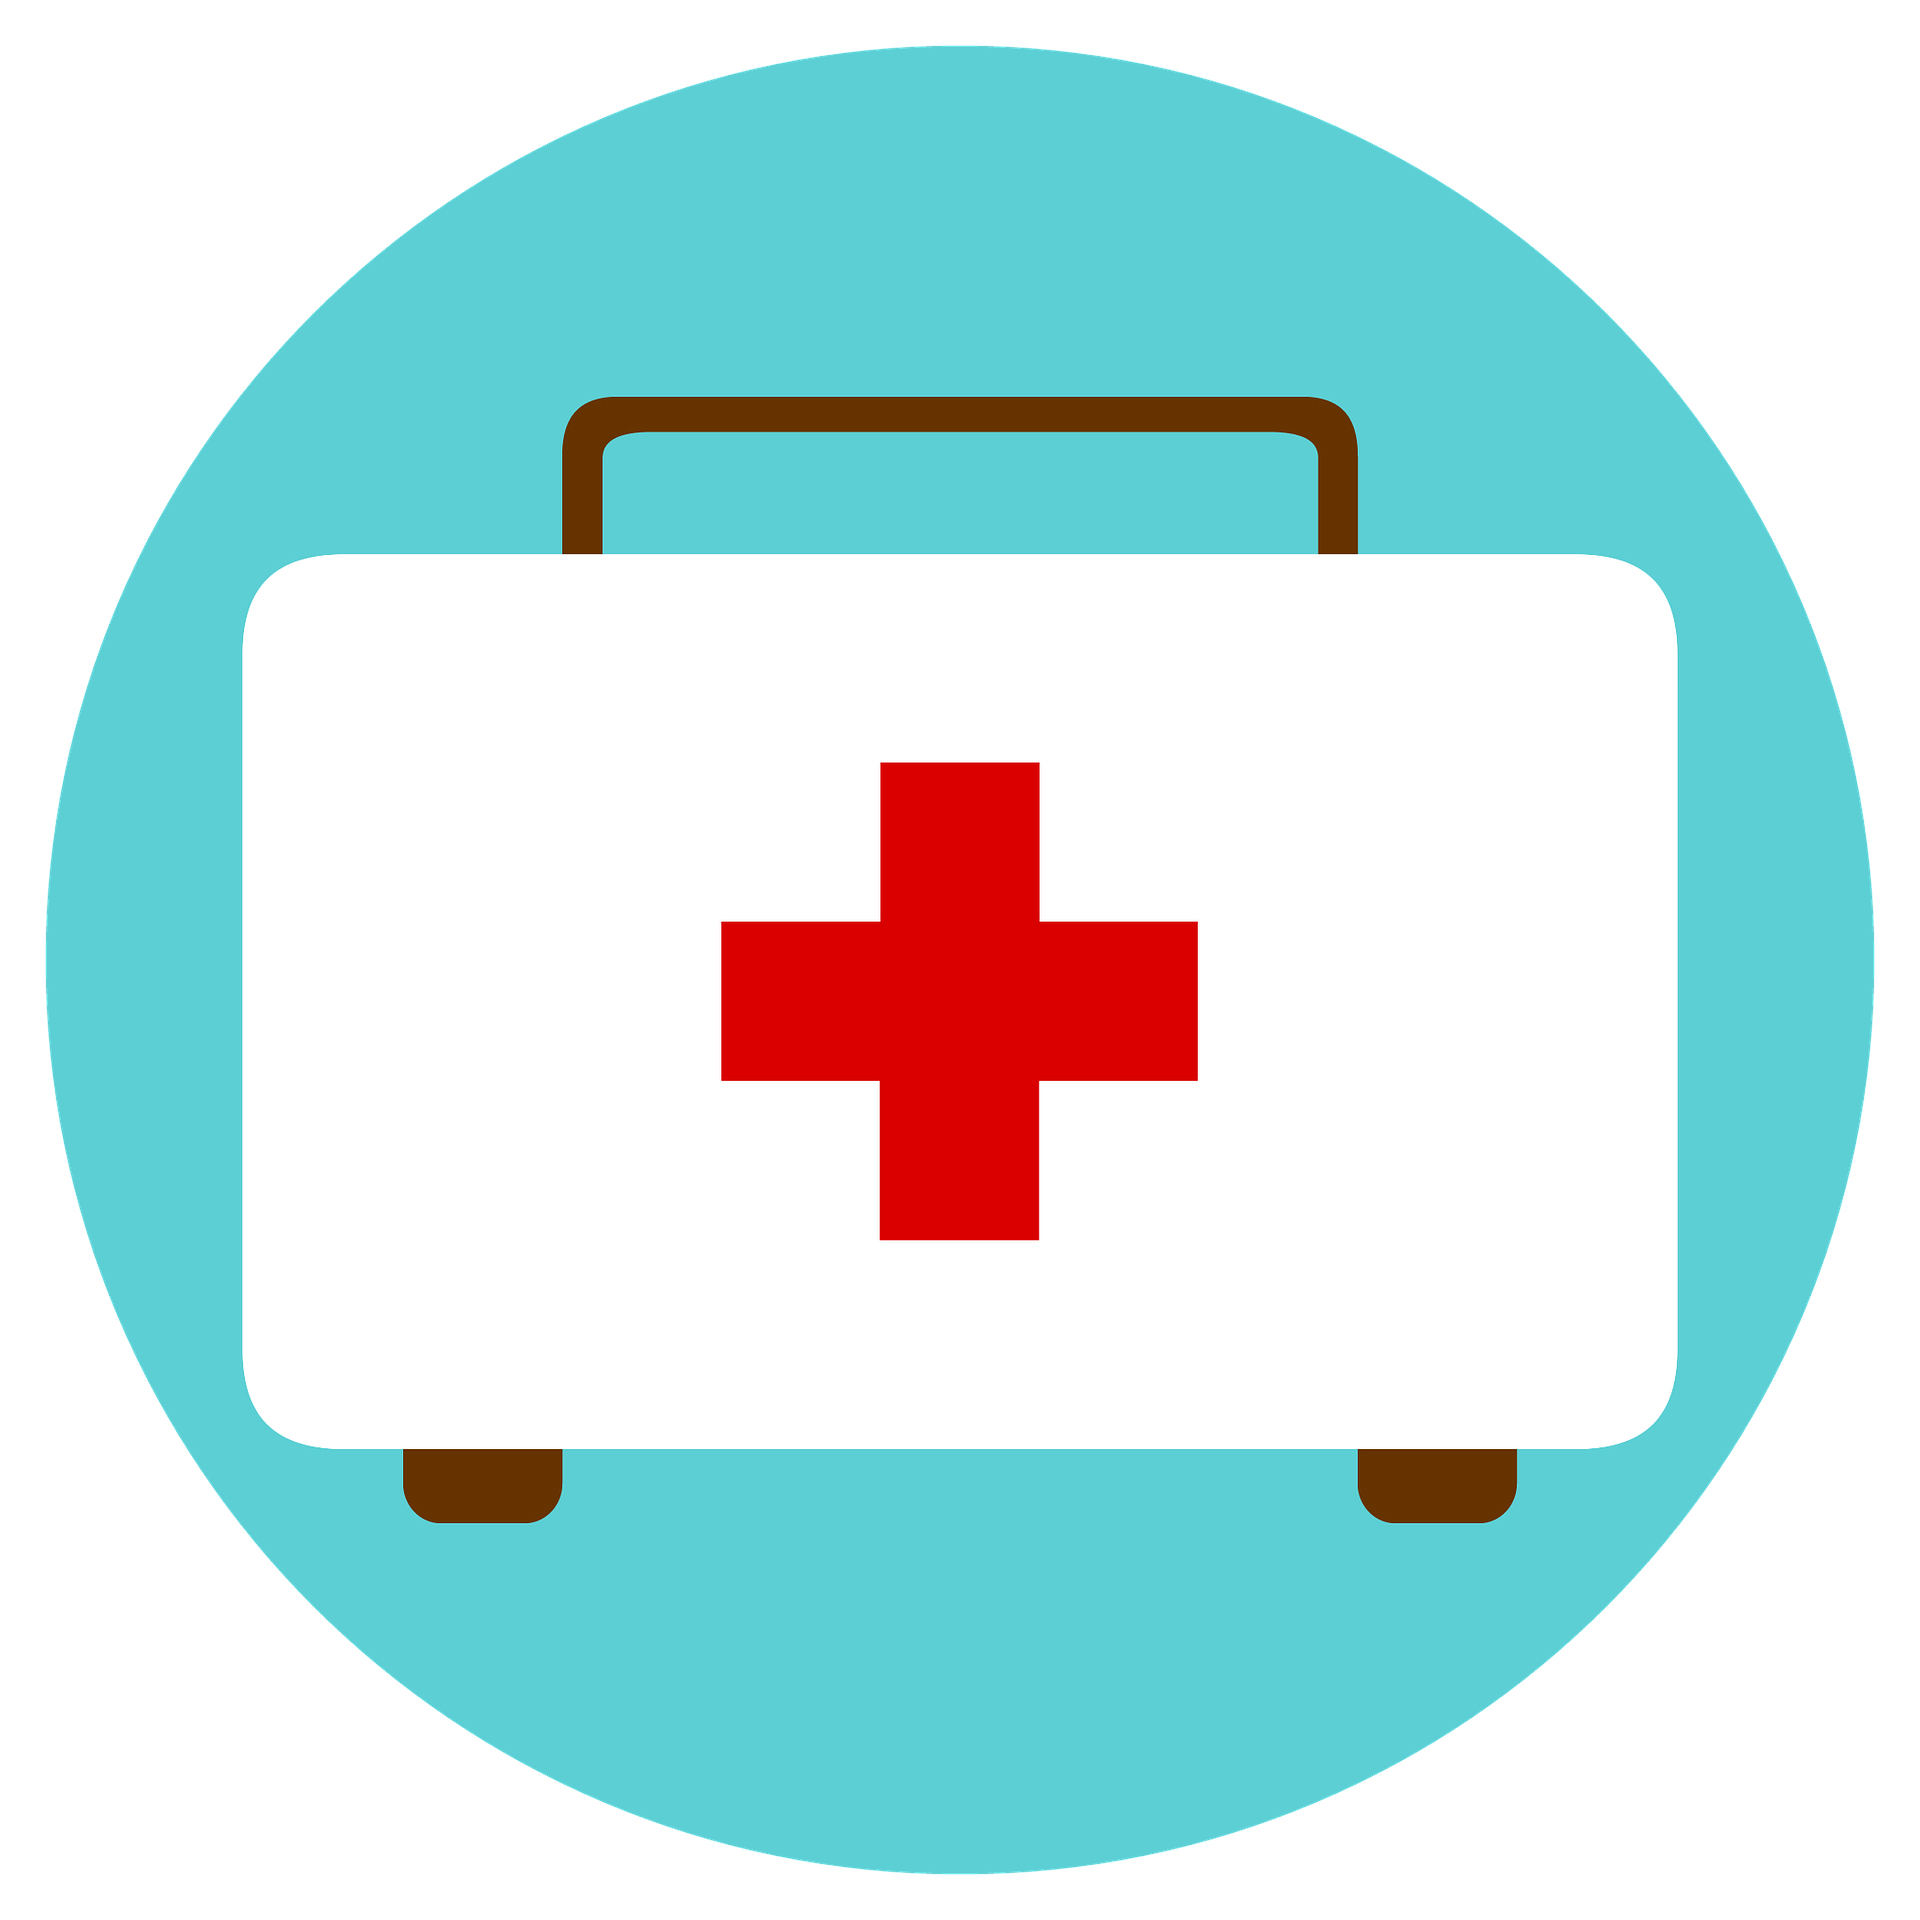 Erste Hilfe first aid kit 1704526 1920